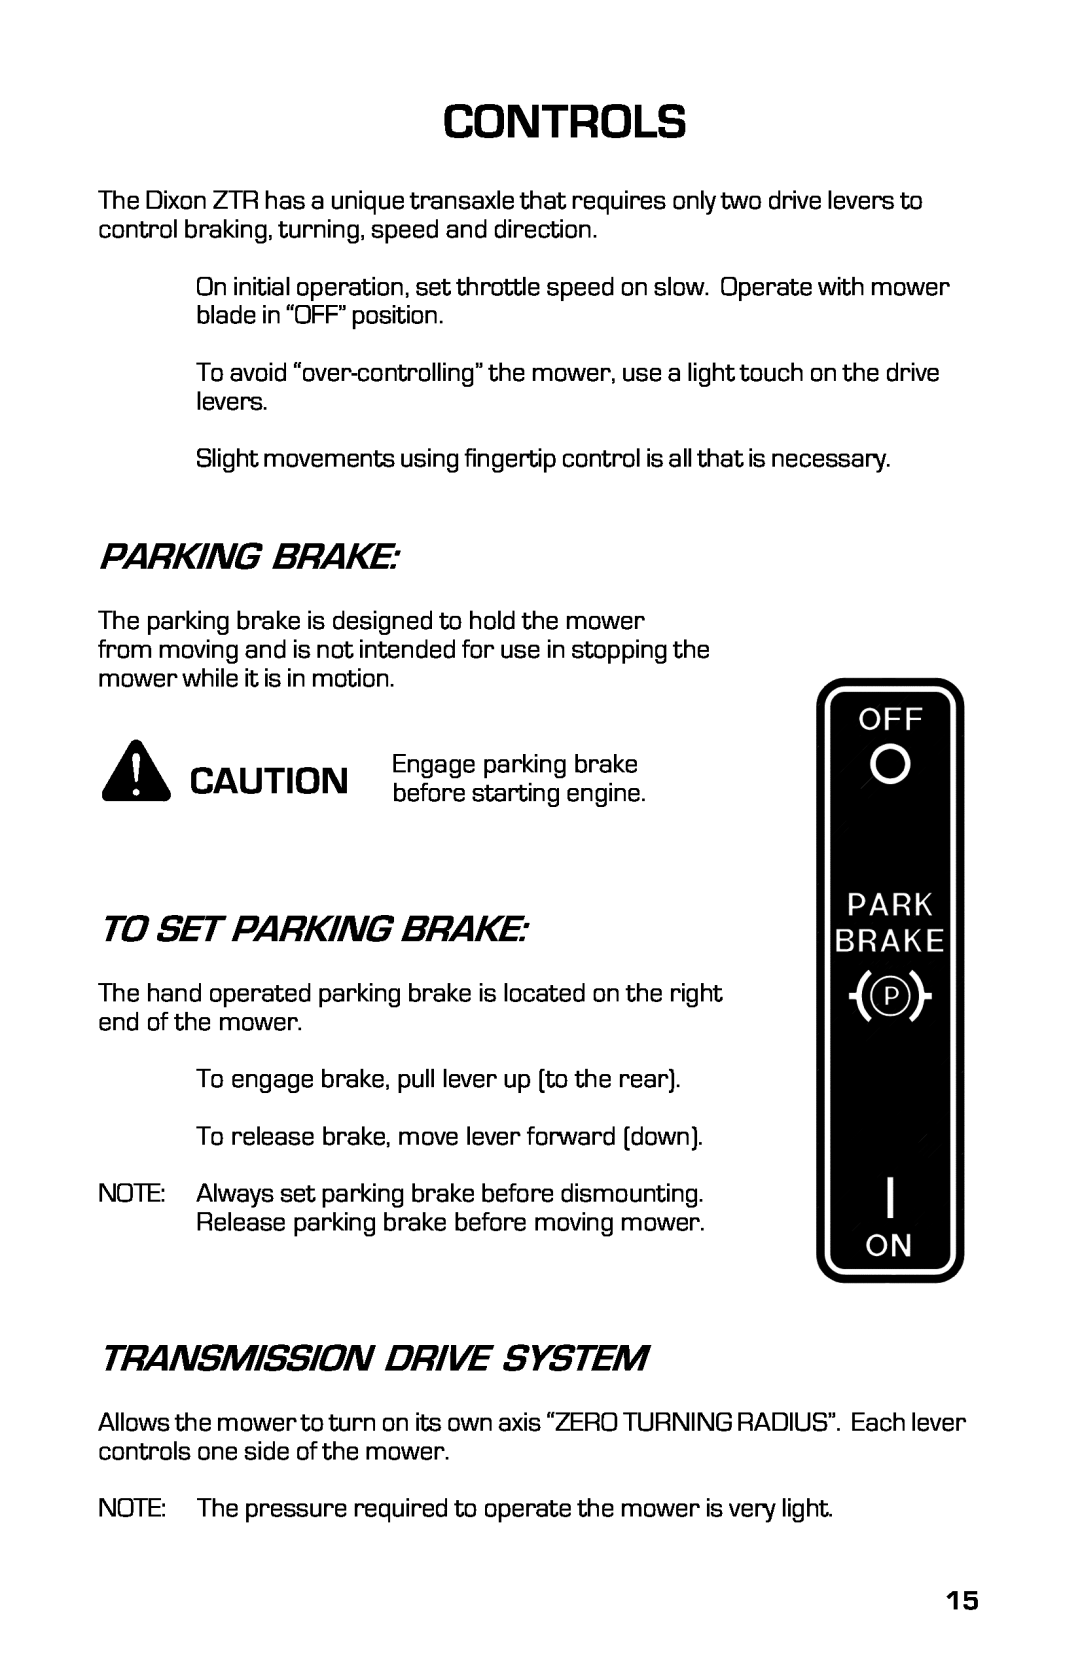 Dixon ZTRCLASSIC manual Controls, To Set Parking Brake, Transmission Drive System 